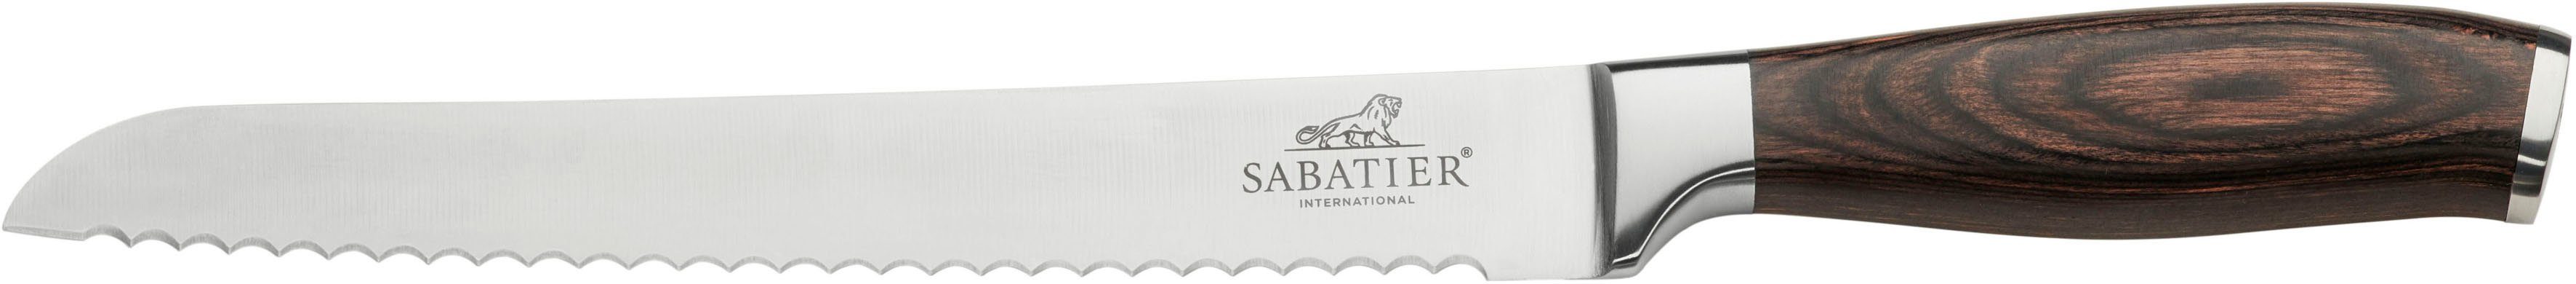 SABATIER International Brotmesser, rostfreier Klingenstahl, geschmiedete Messerklinge